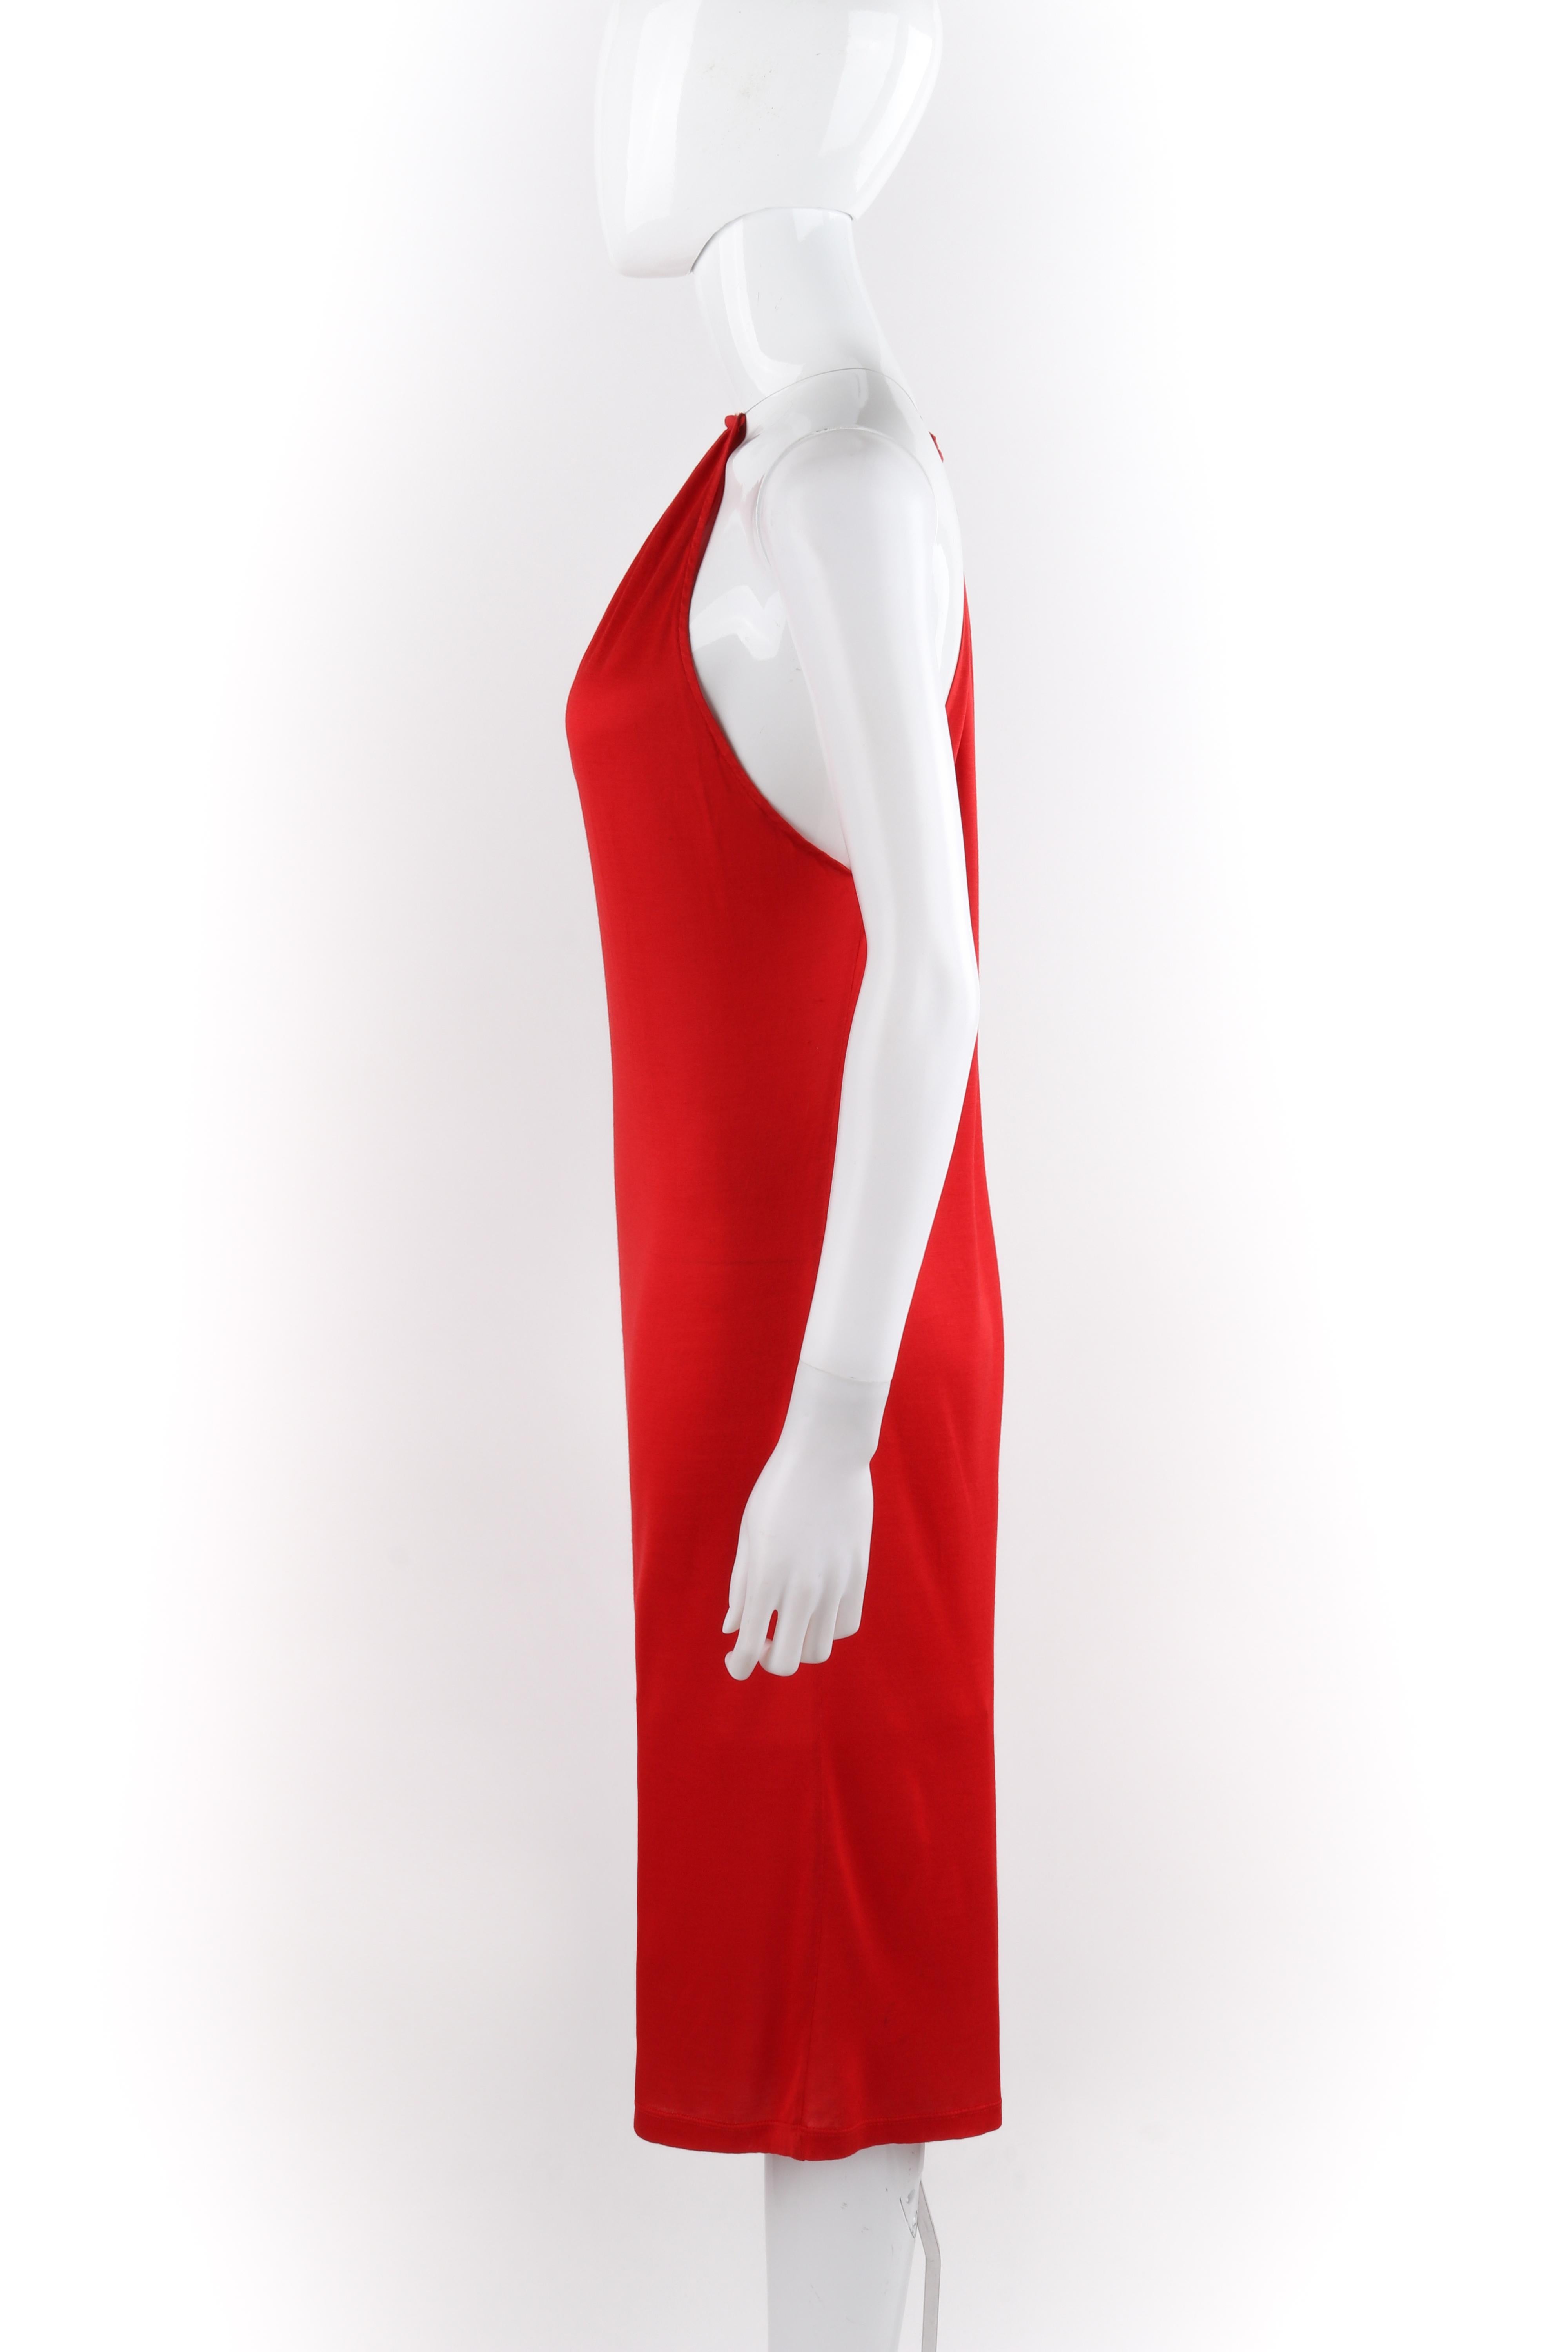 ALEXANDER McQUEEN S/S 2001 “Eye” Red Keyhole Cutout Wire Choker Halter Top Dress For Sale 1